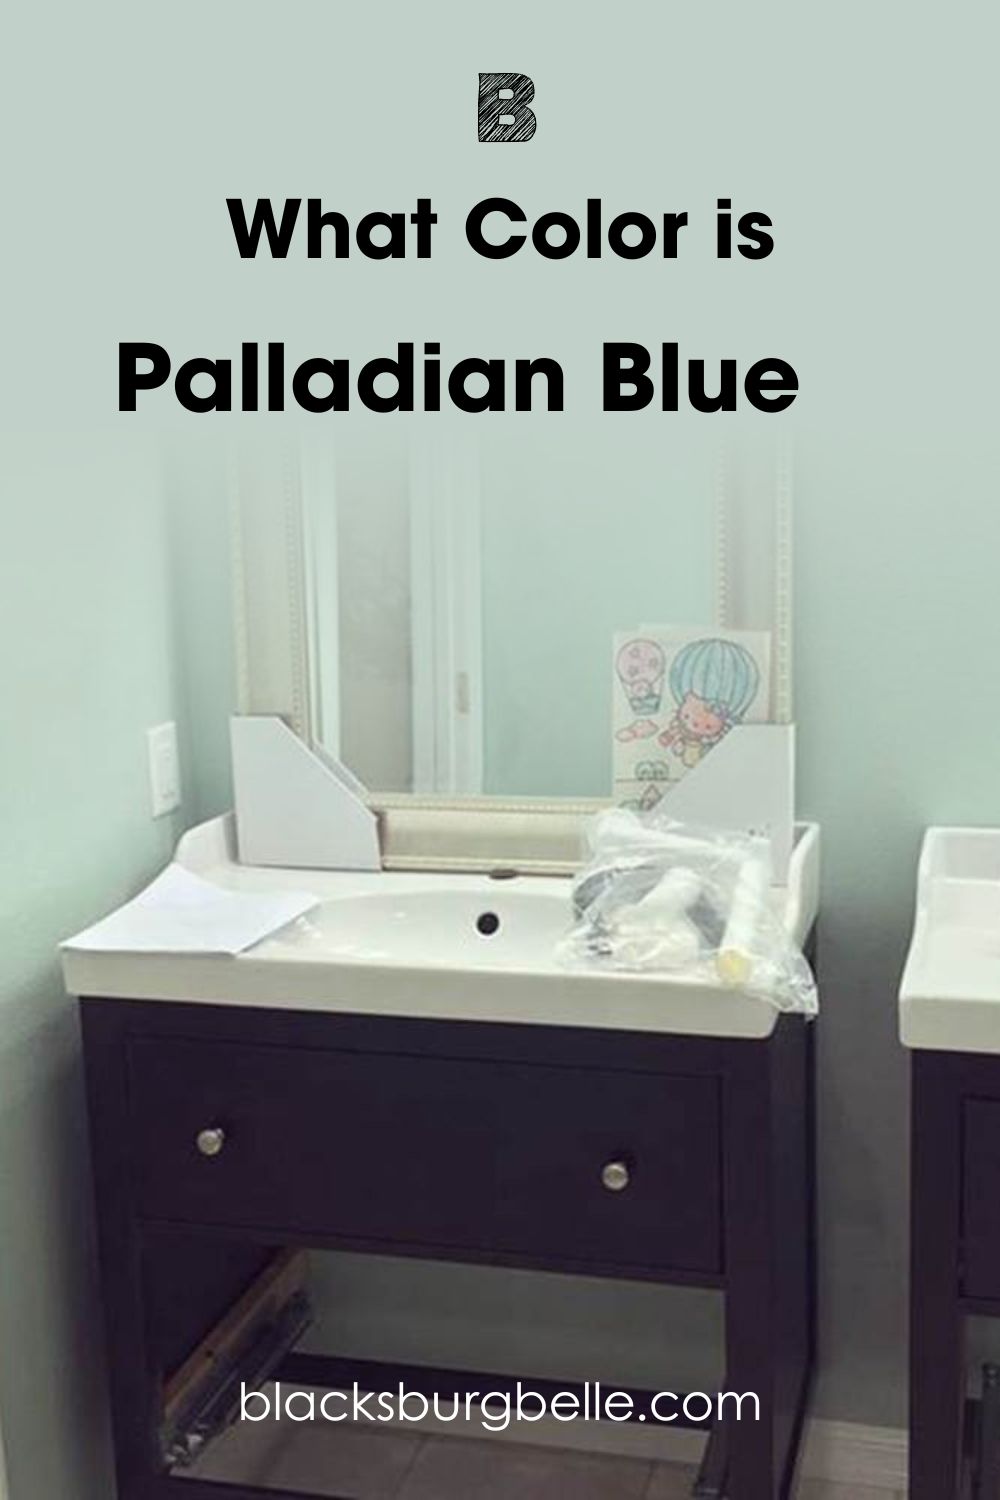 Palladian Blue